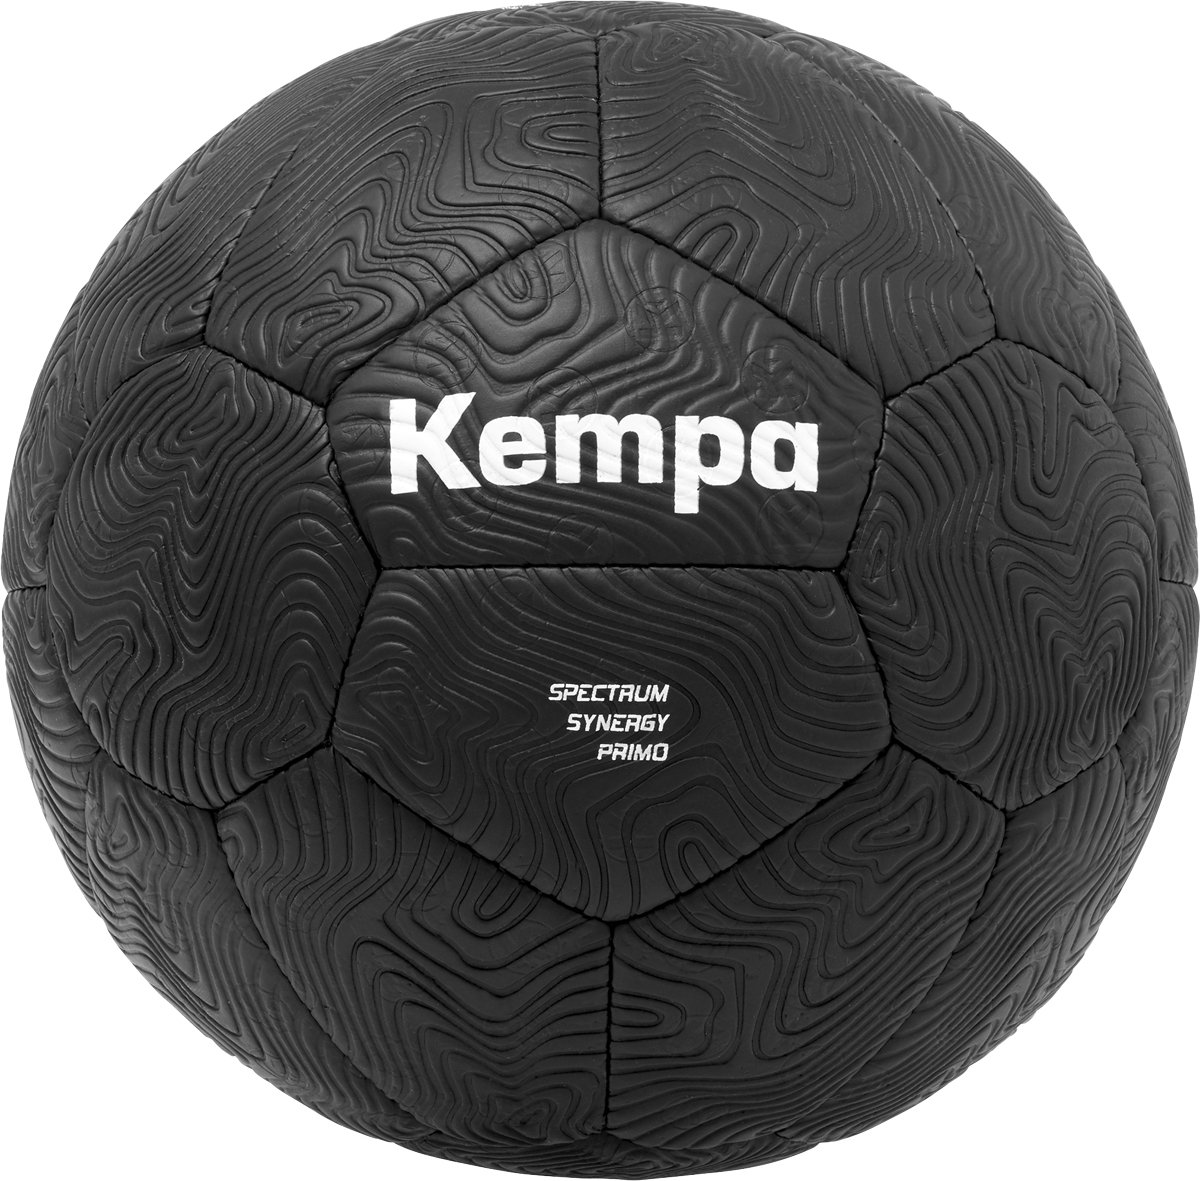 Kempa Black and White Synergy Spectrum Primo Handbal Maat Mt. 1